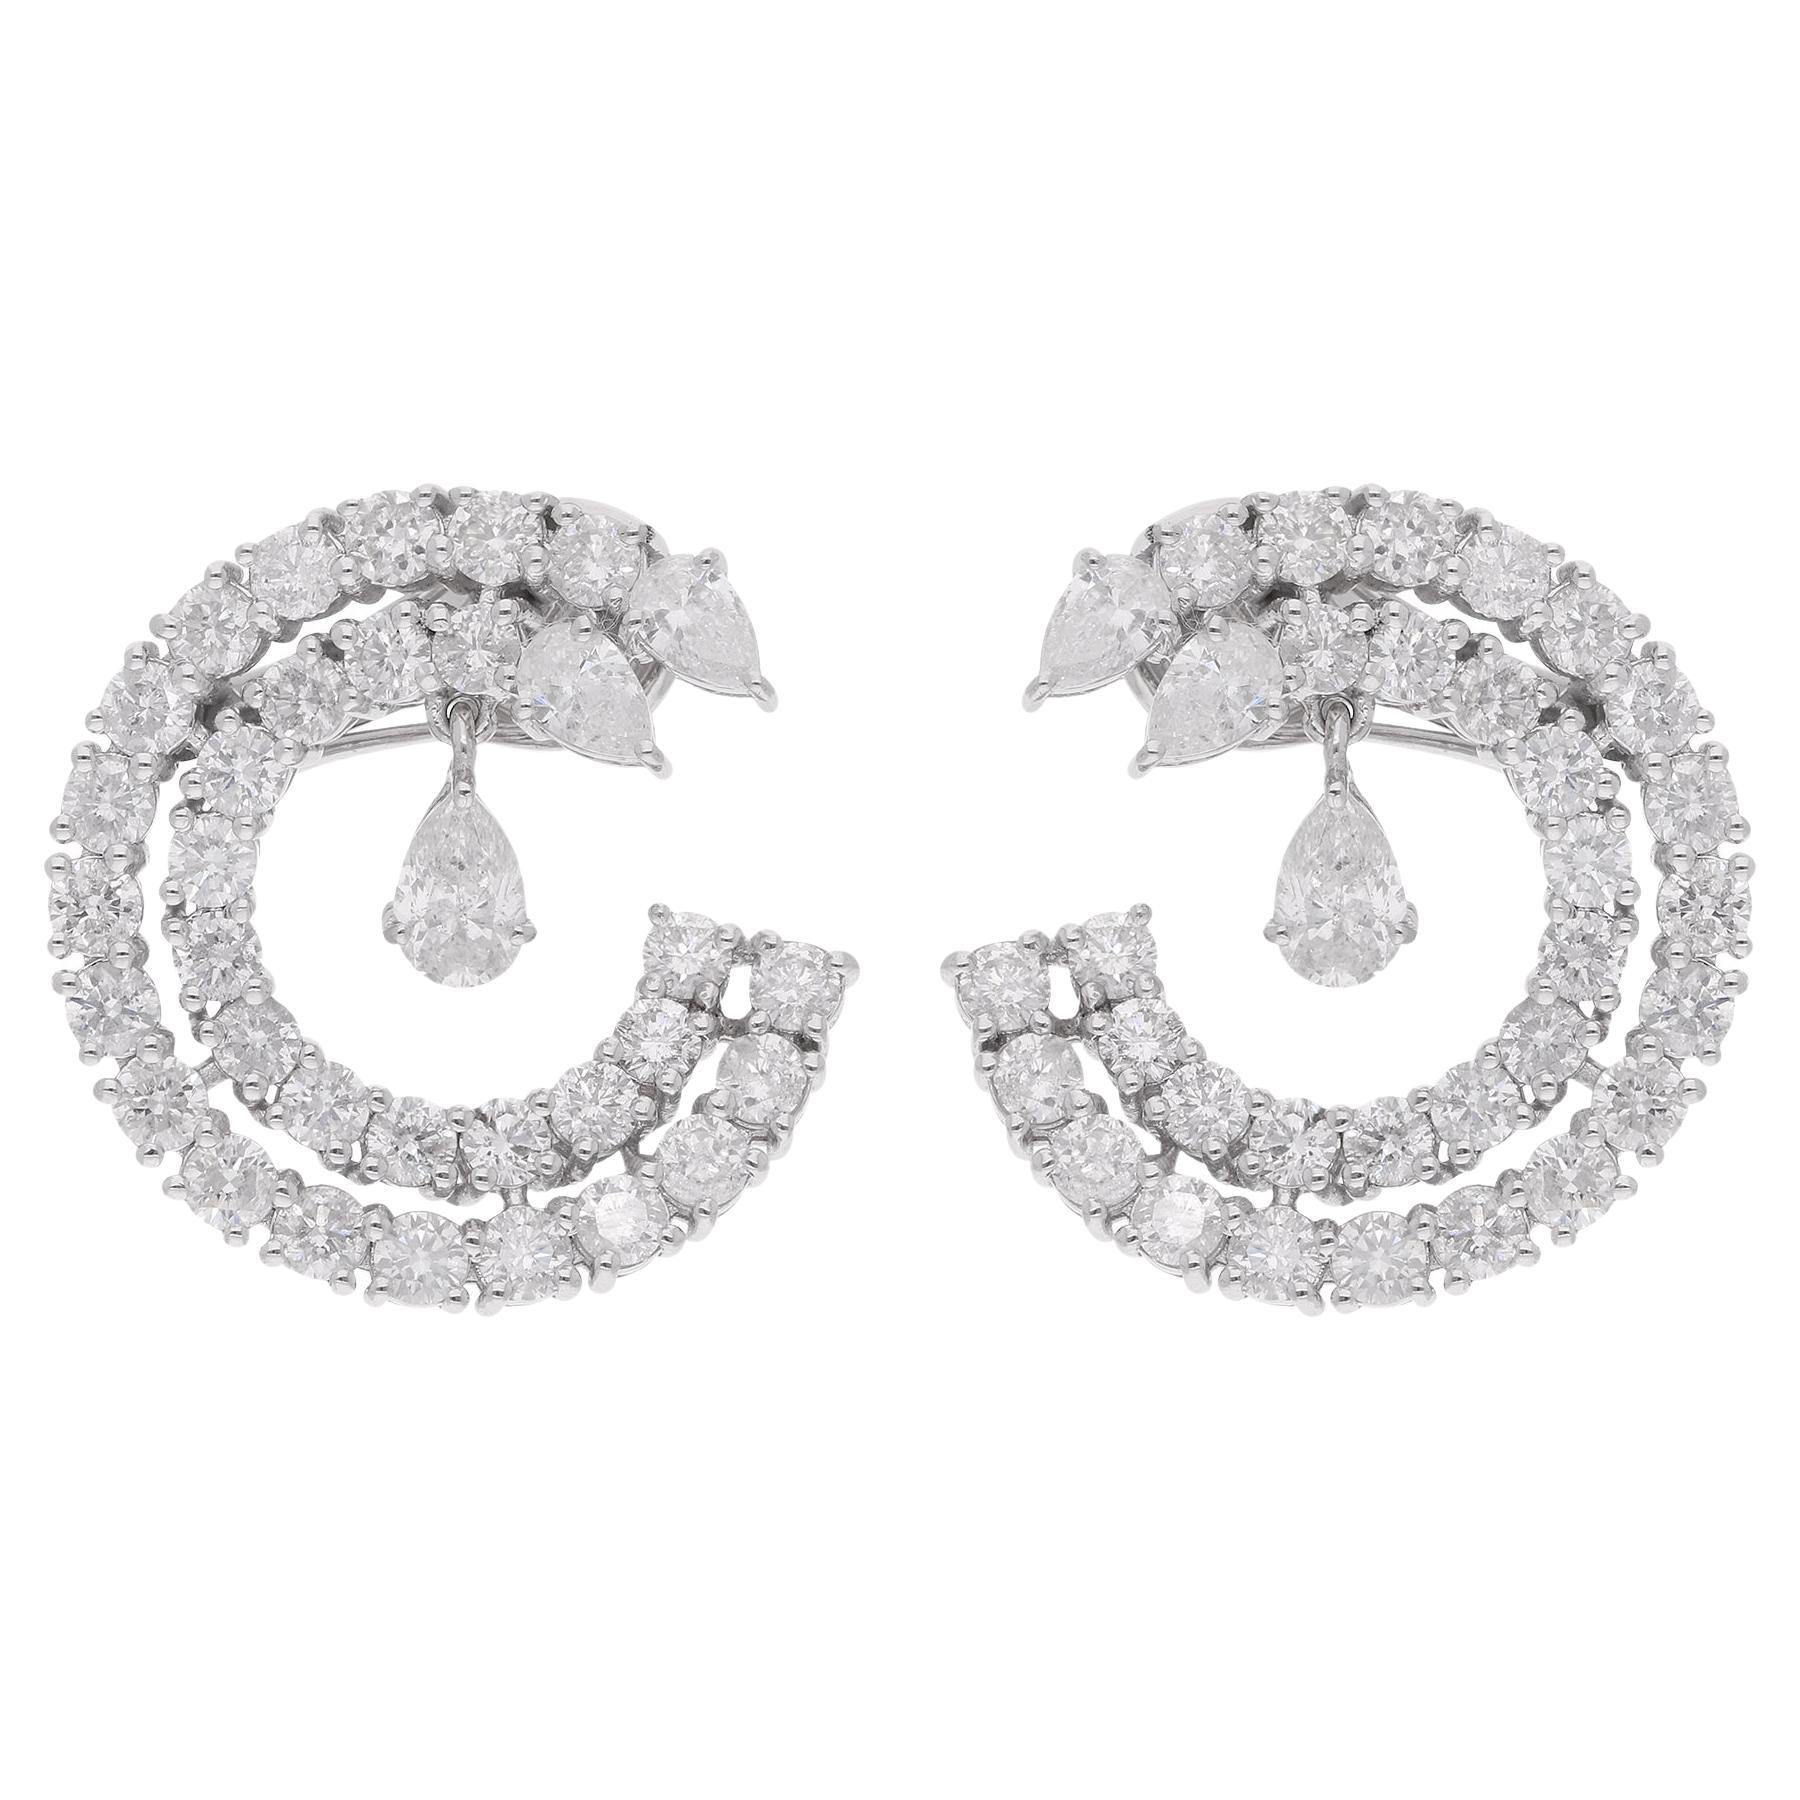 5.21 Carat Pear & Round Diamond Earrings 18 Karat White Gold Handmade Jewelry